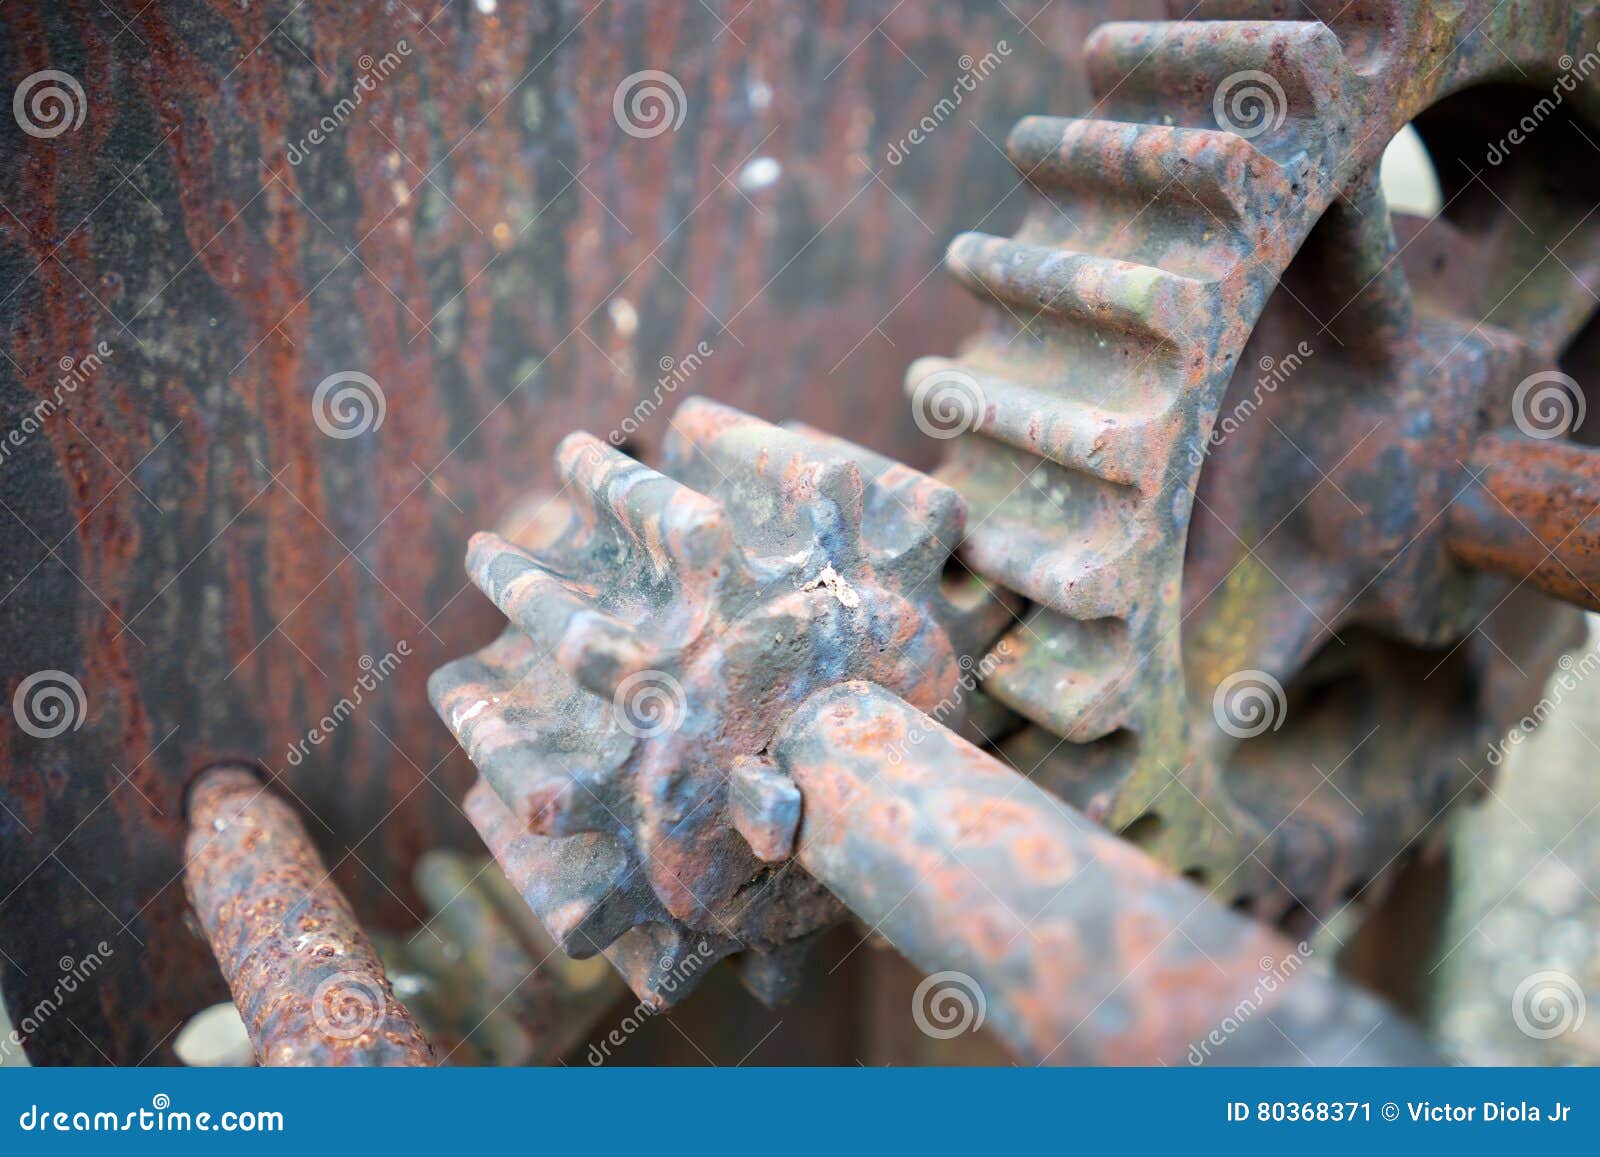 rusty old gears closeup